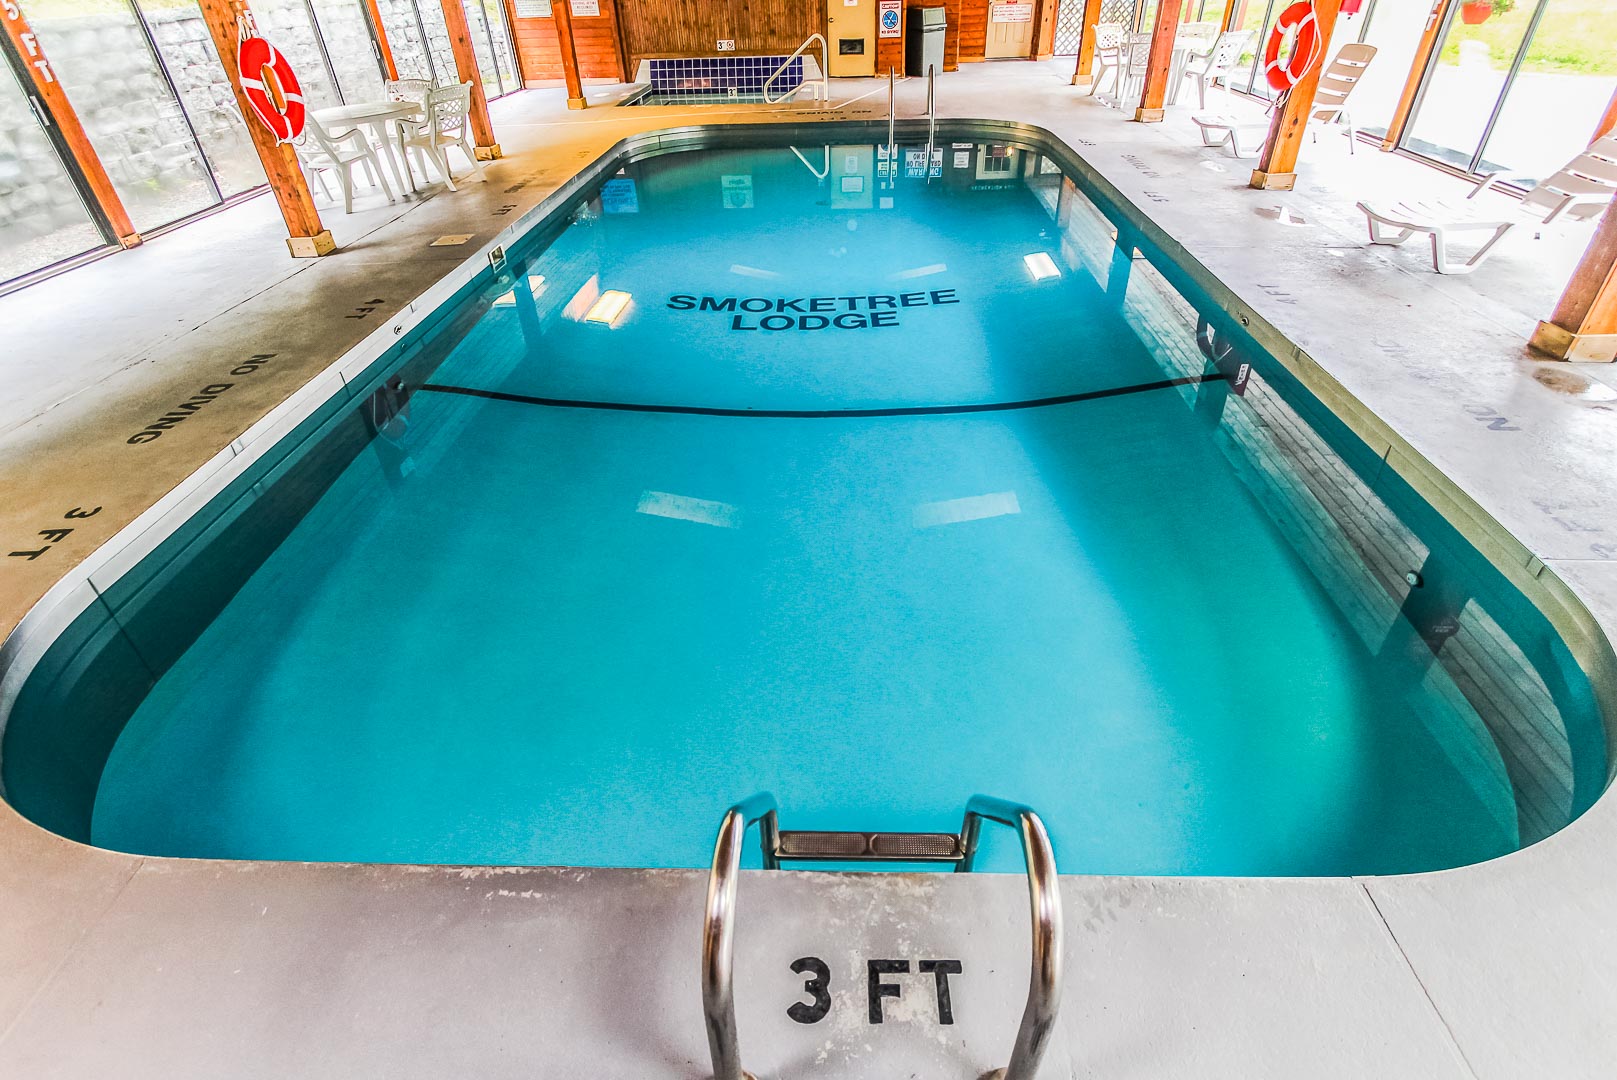 An spacious indoor swimming pool at VRI's Smoketree Lodge in North Carolina.